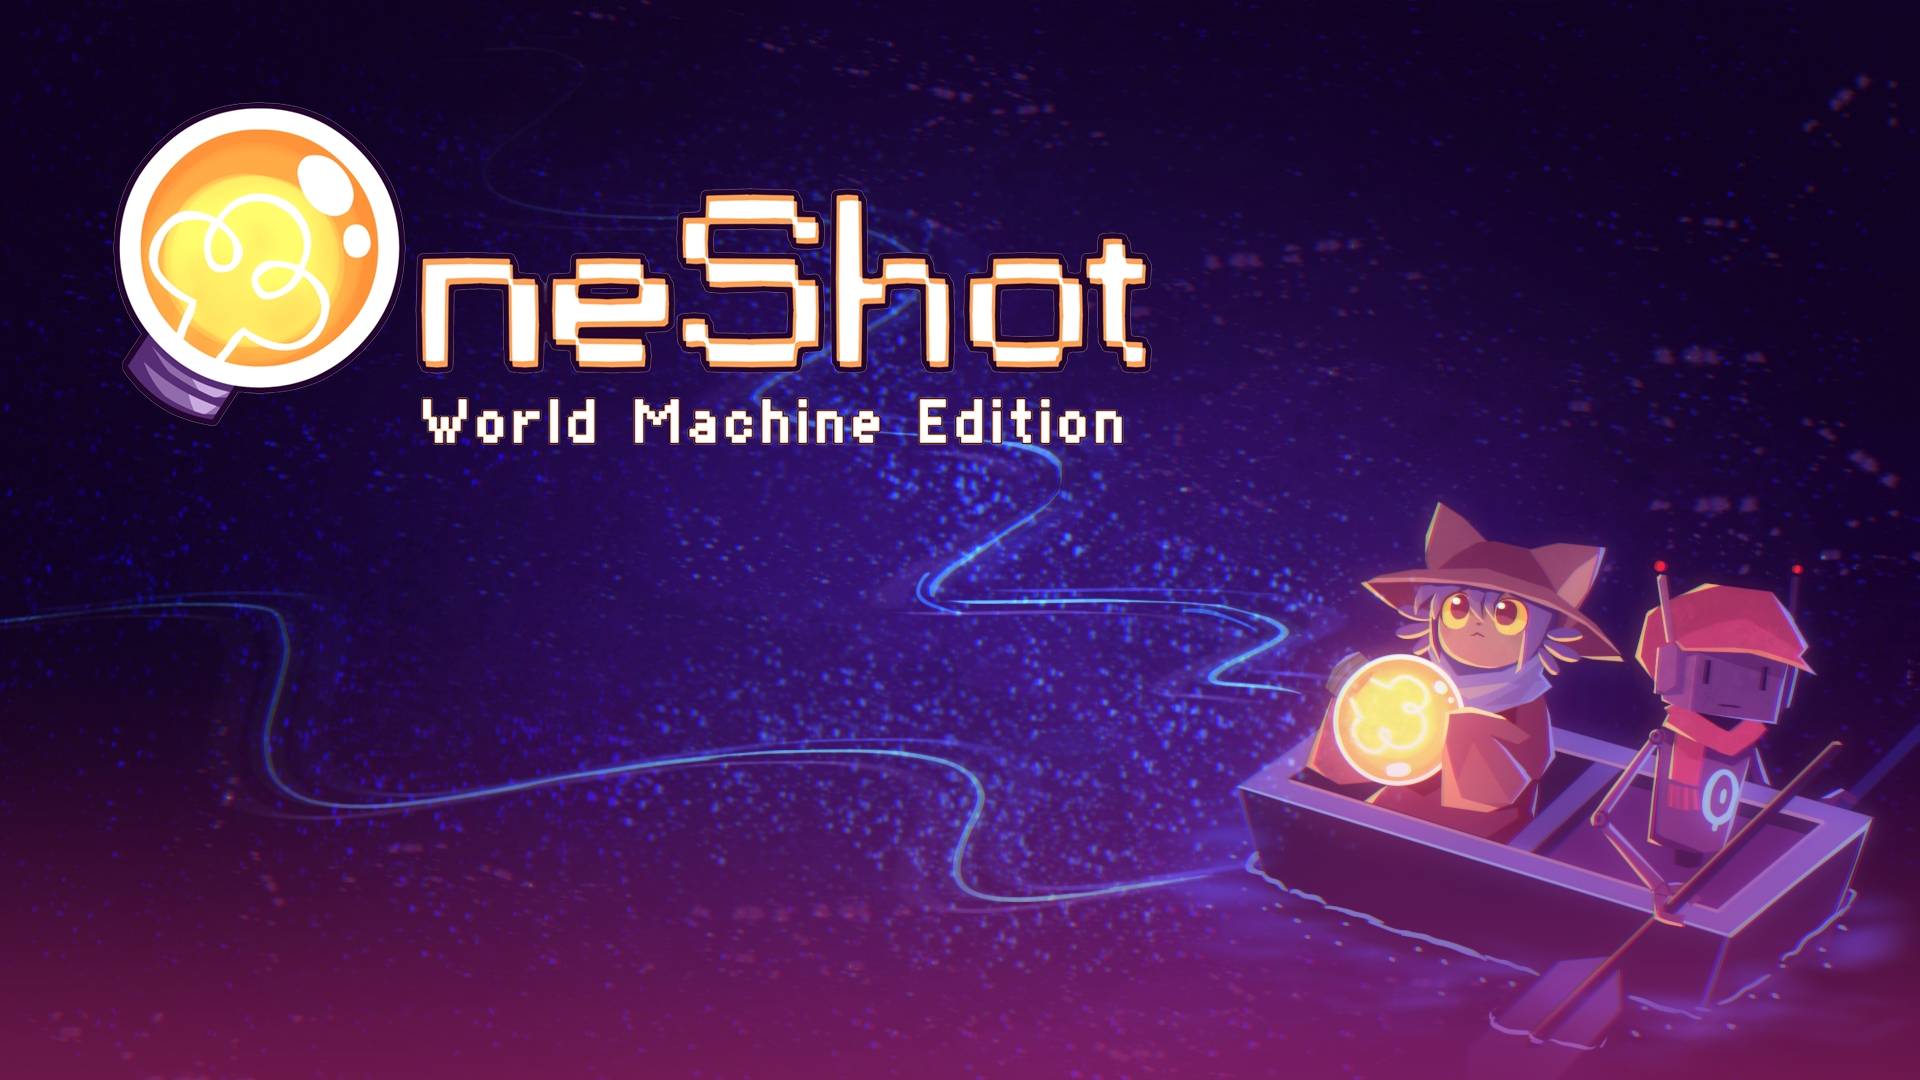 OneShot é uma grata supresa na Steam